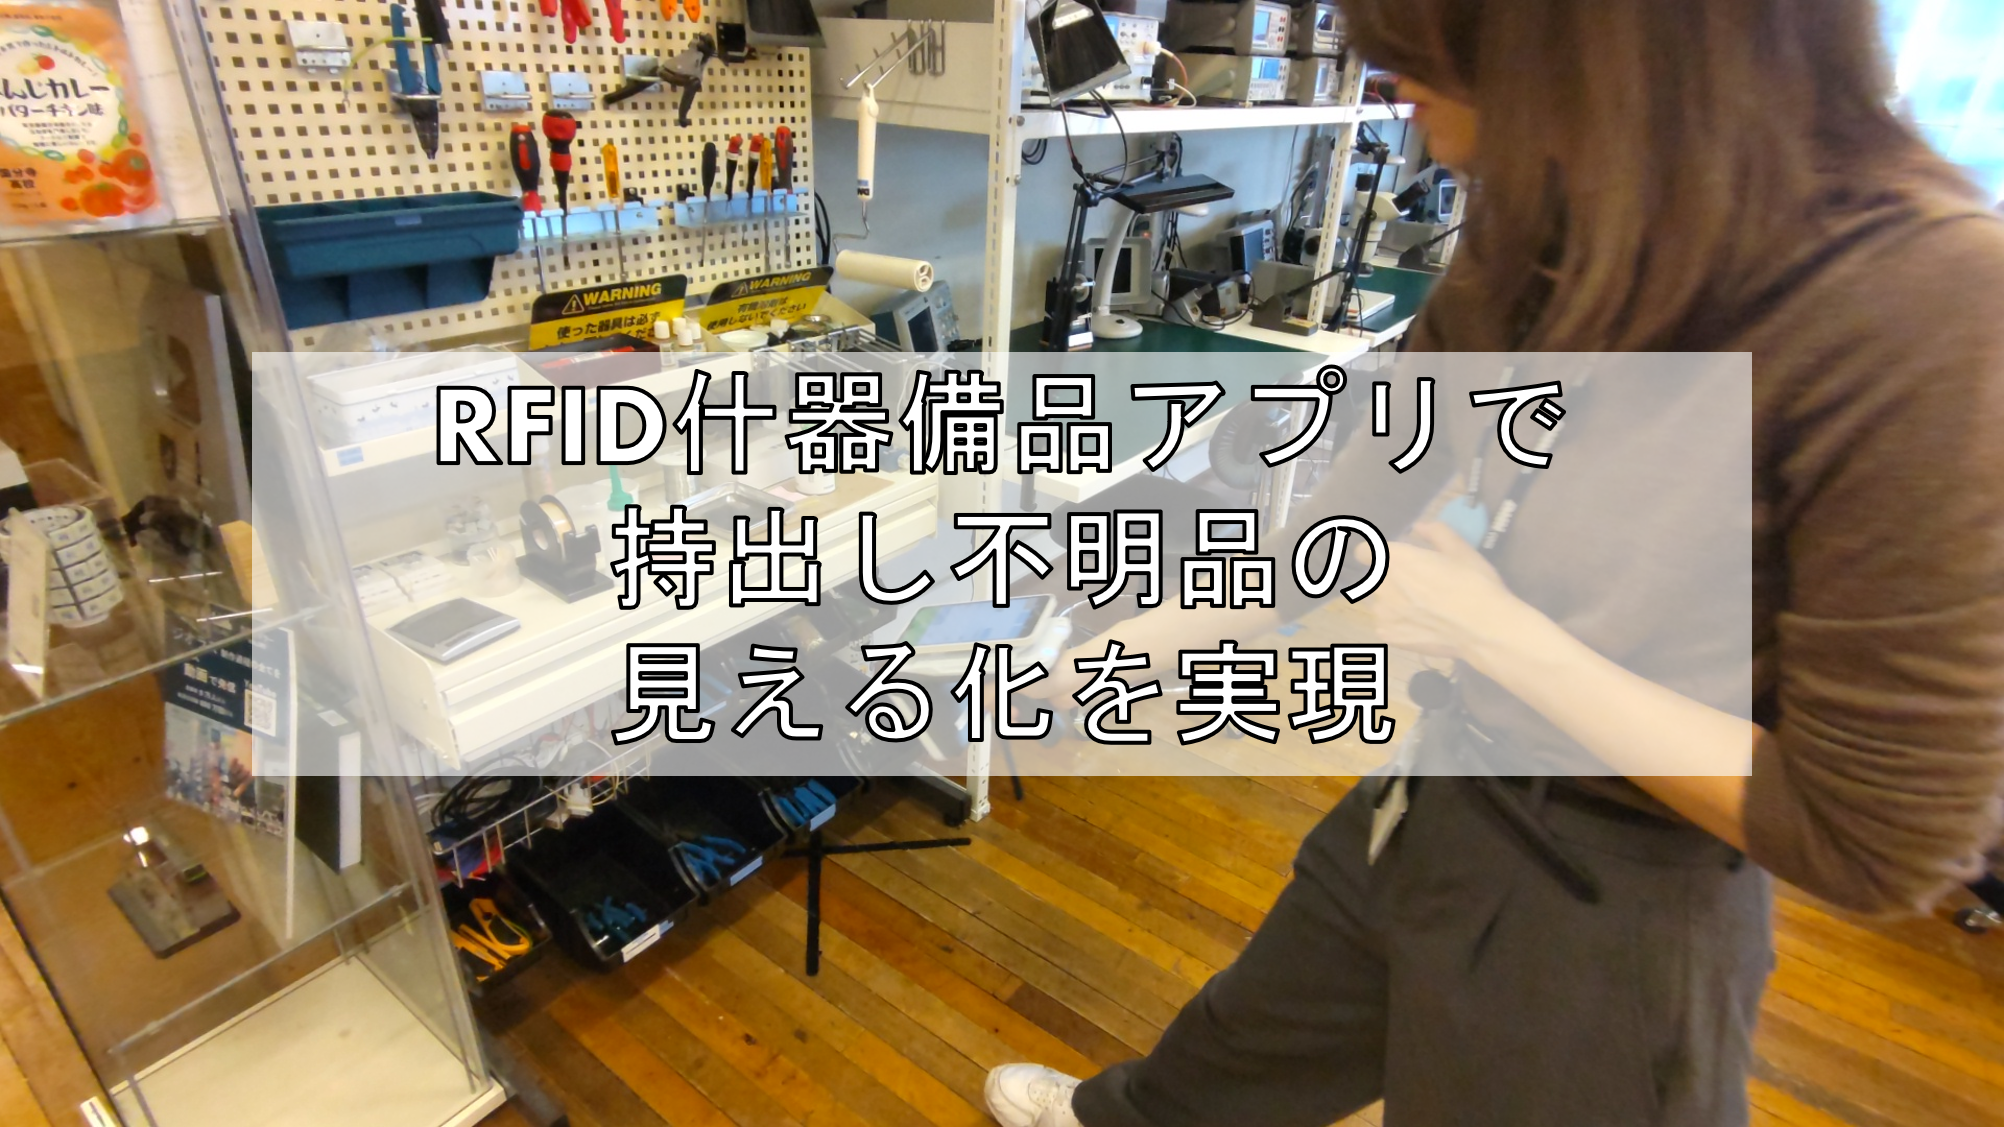 RFID什器備品アプリで持出し不明品の見える化を実現